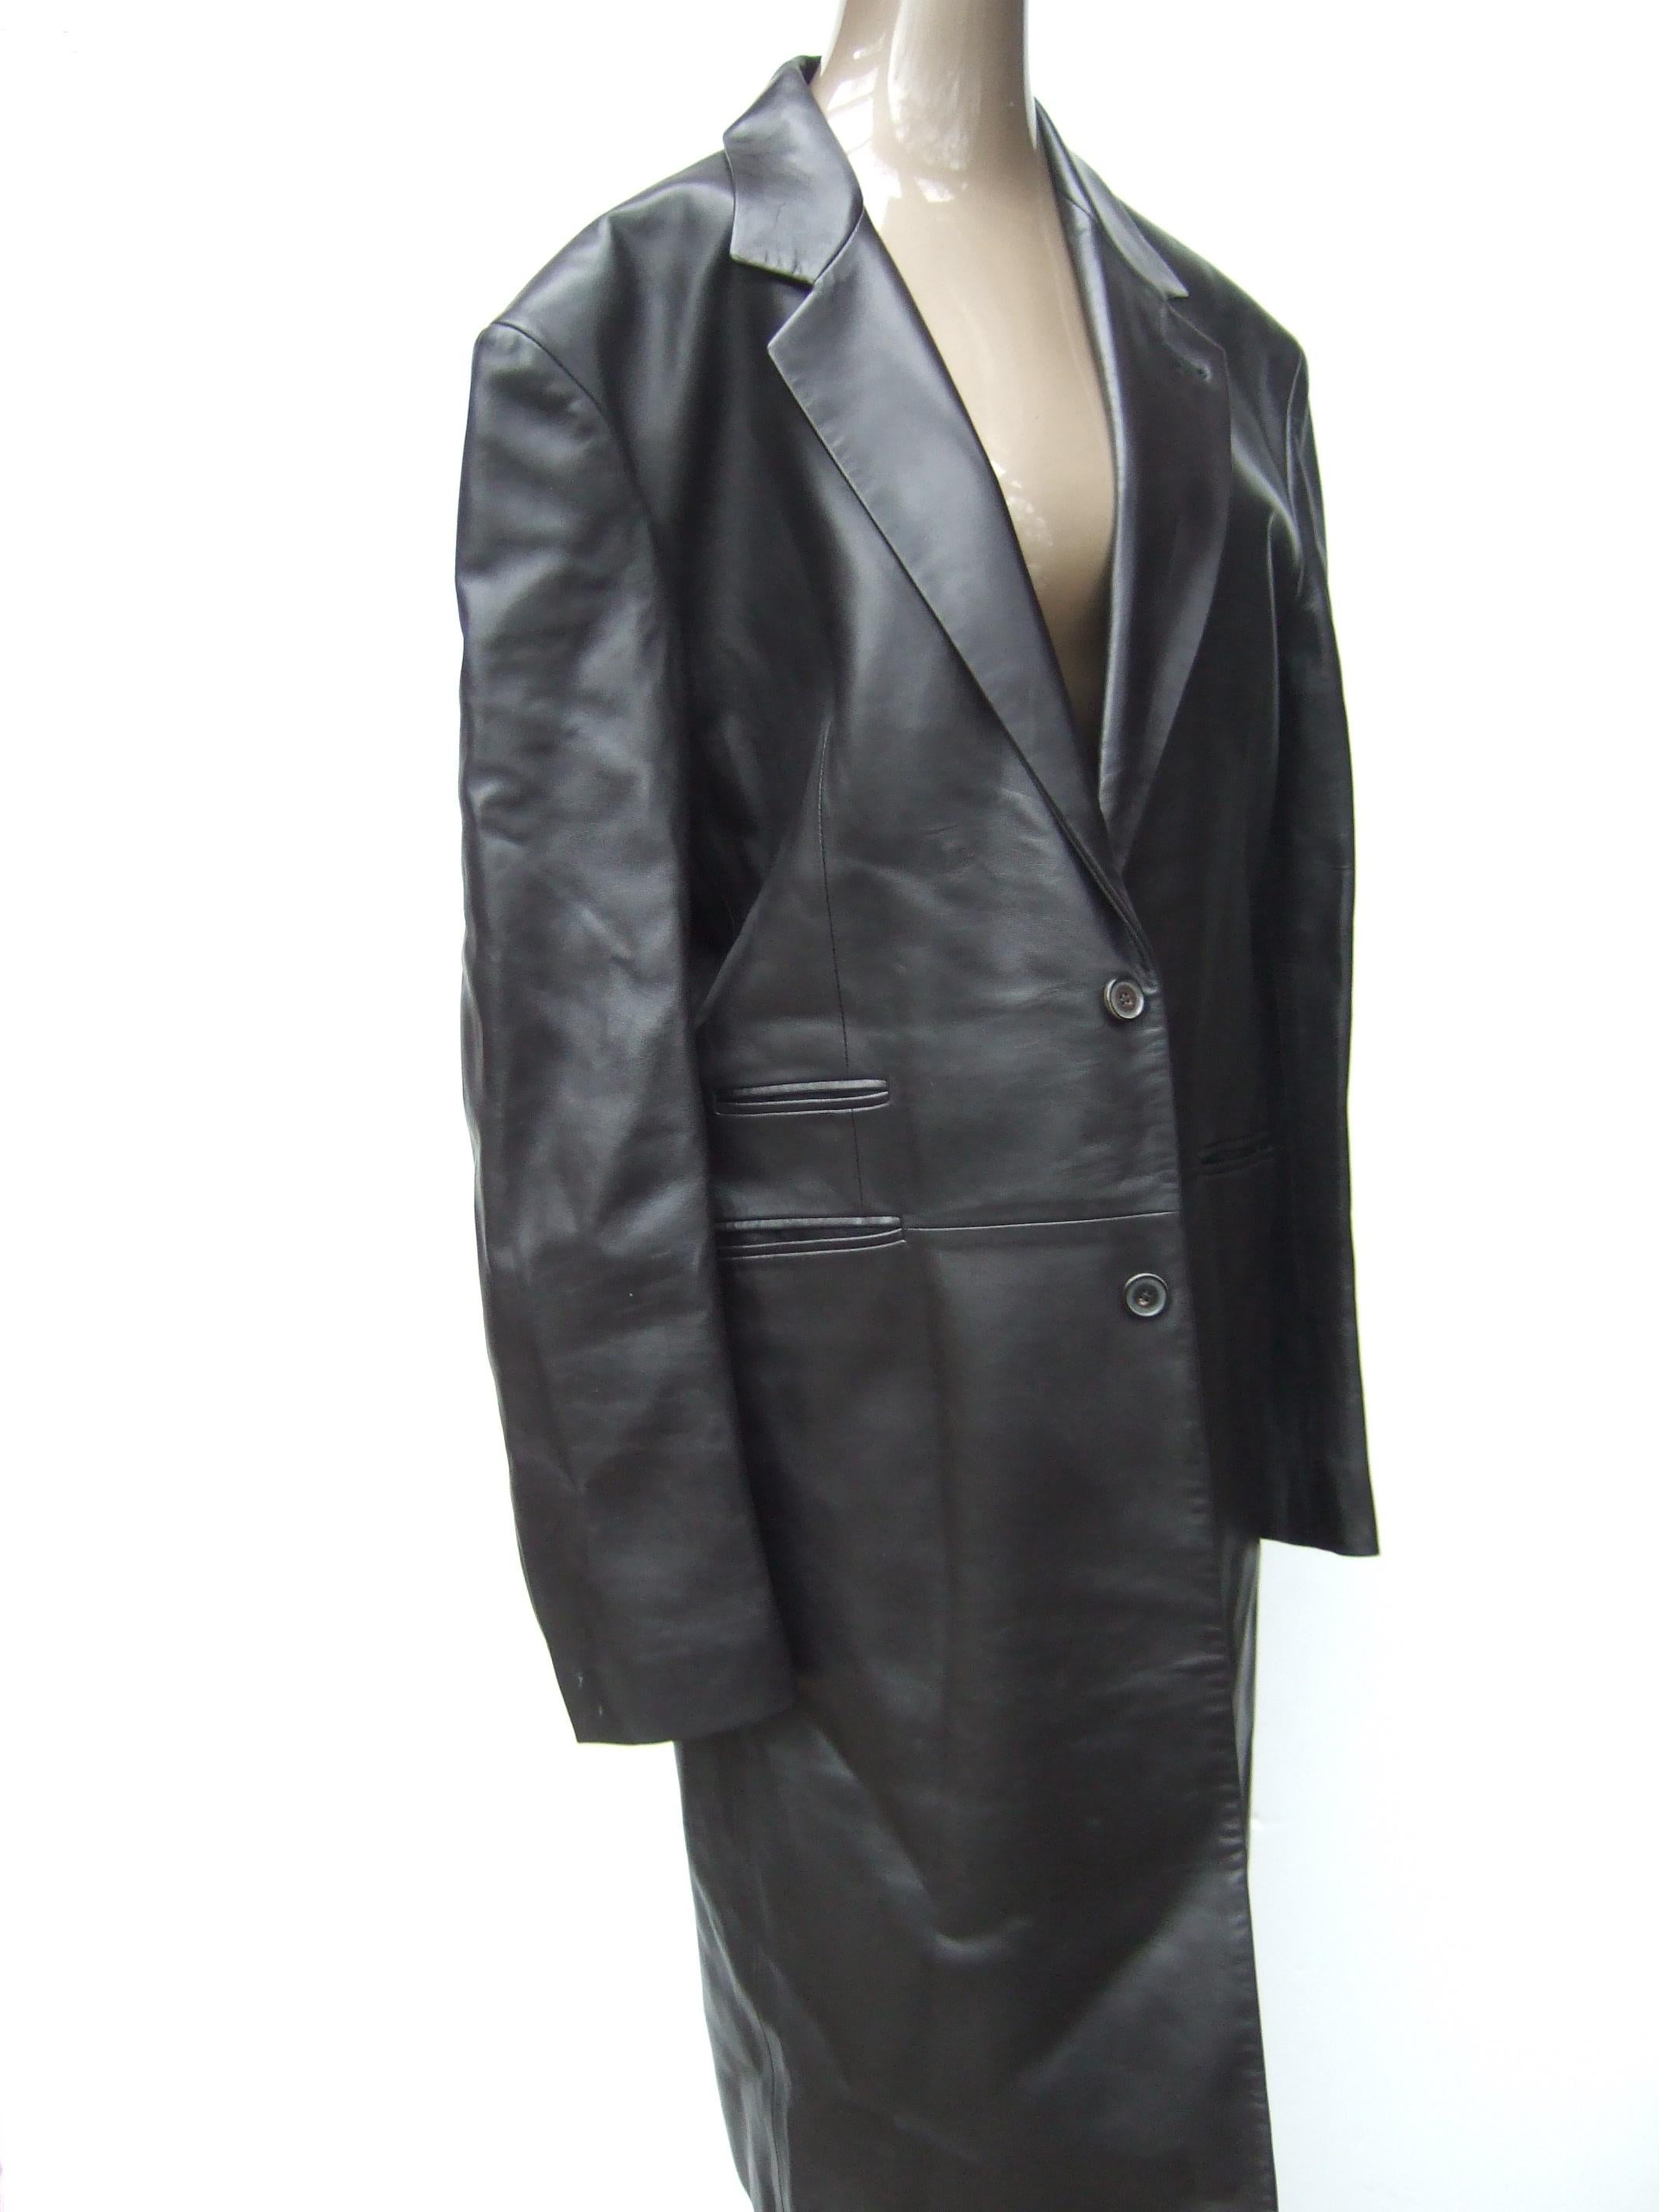 Hermes Men's Buttery Soft Black Lambskin Leather Unisex Coat Size 54 c 21st c  For Sale 2